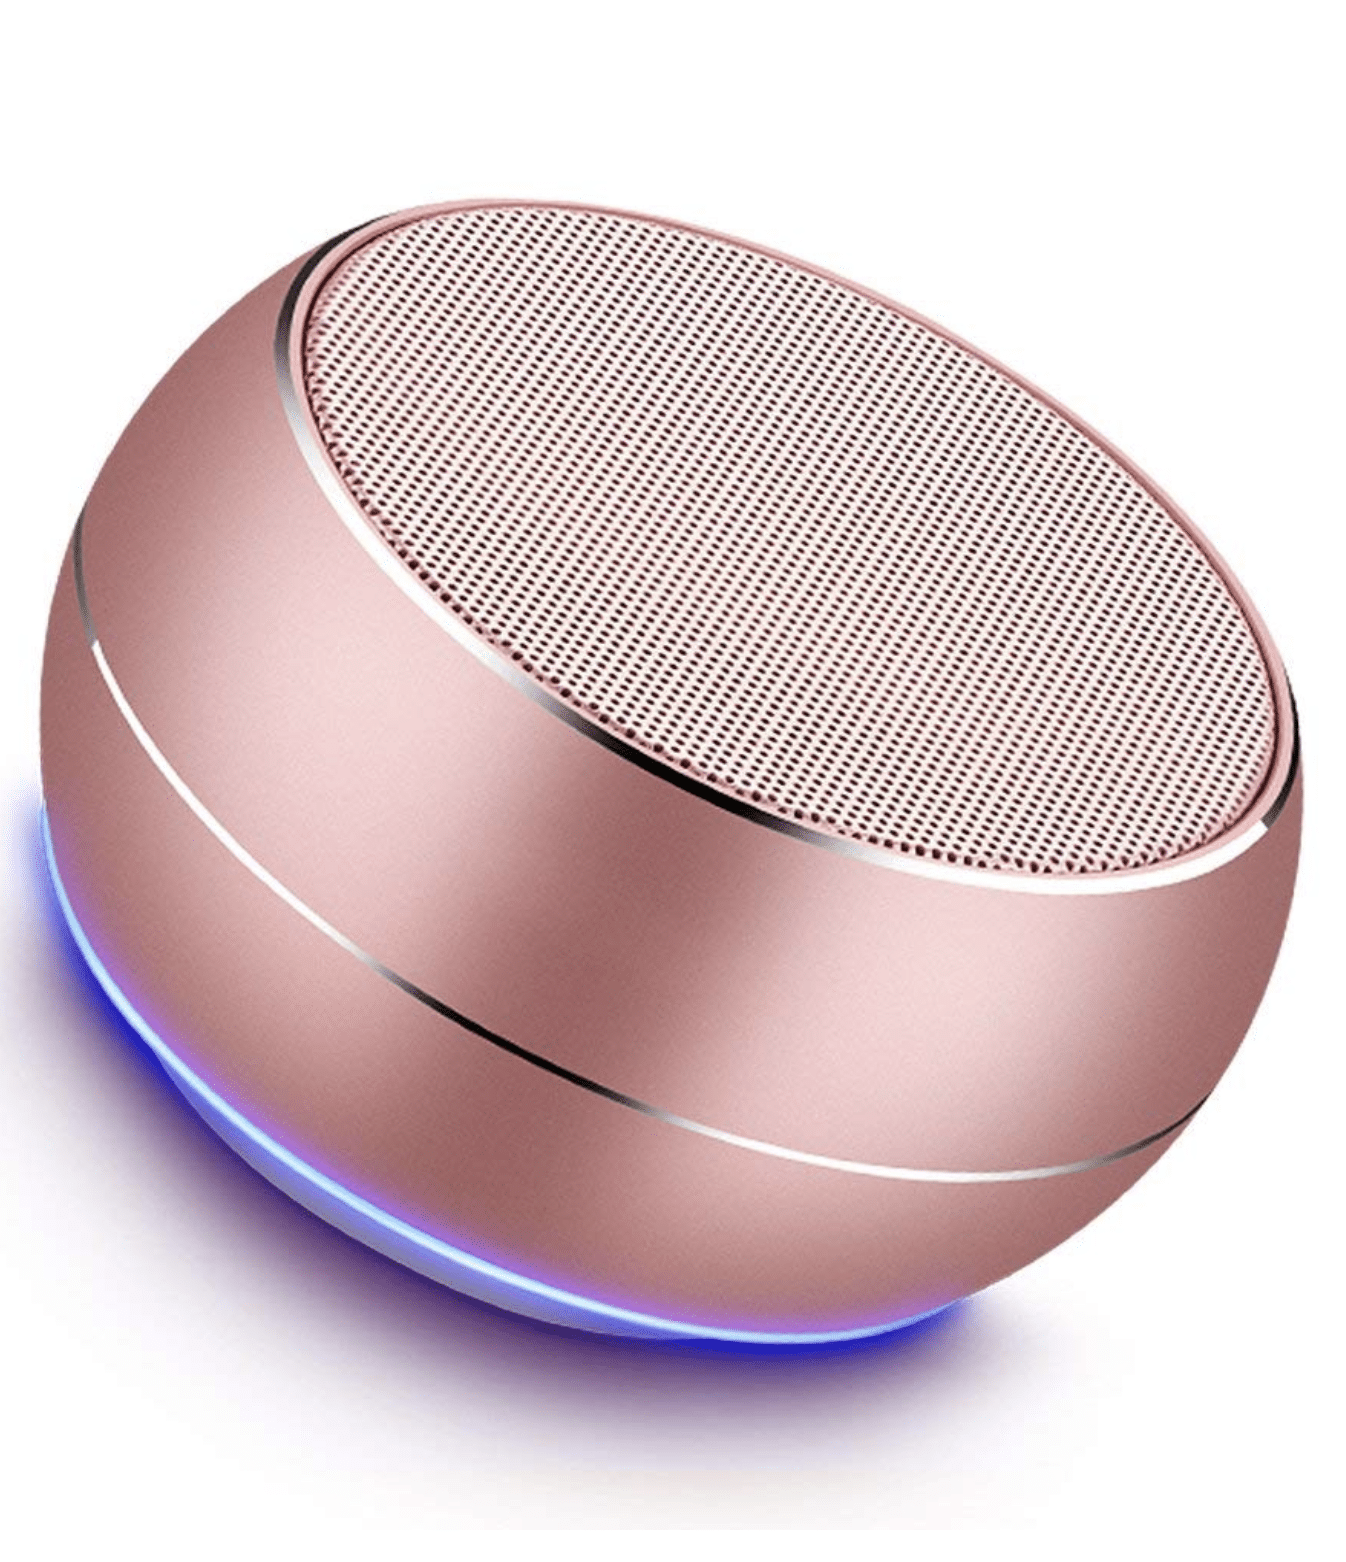 Metallic Pinkportable Bluetooth speaker